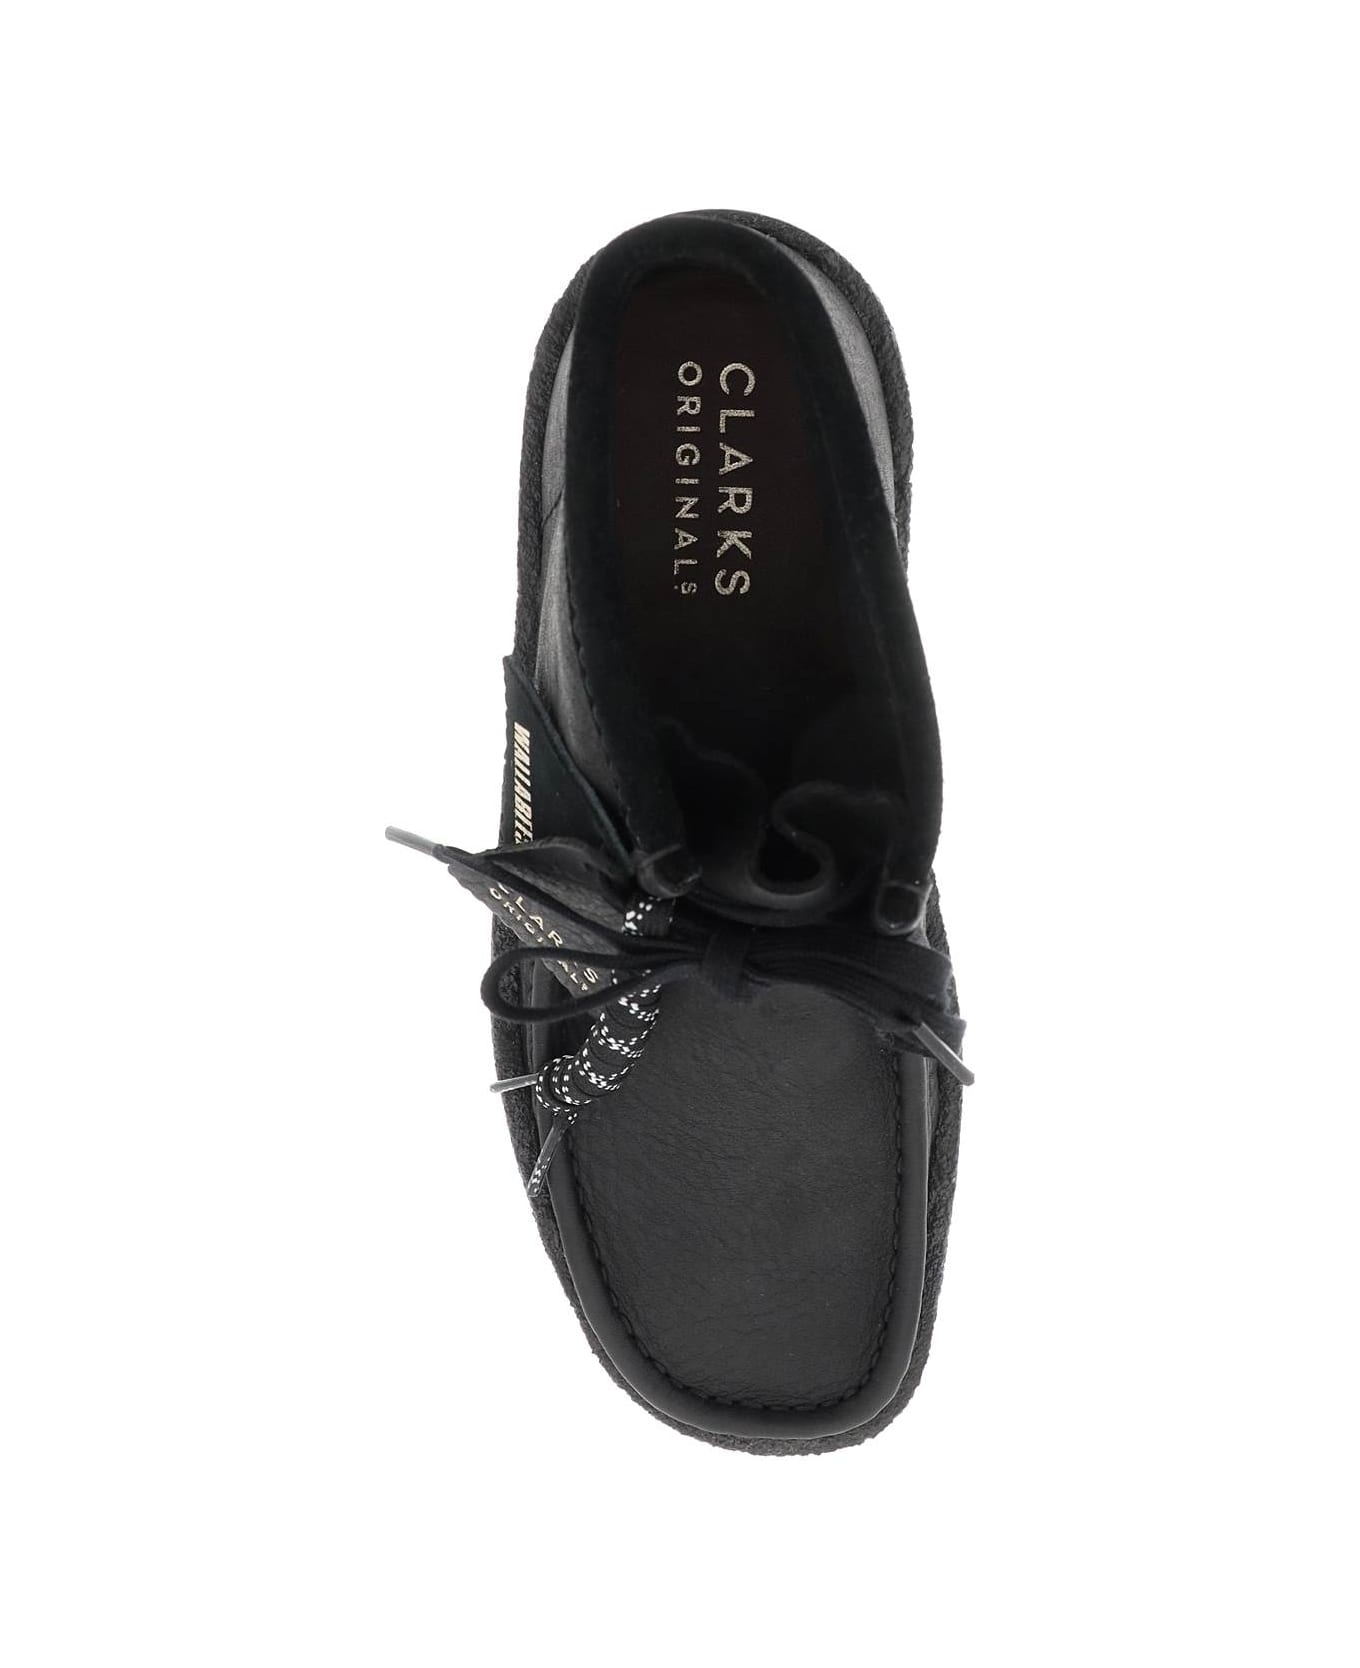 Clarks 'wallabee Cup Bt' Lace-up Shoes - BLACK (Black)